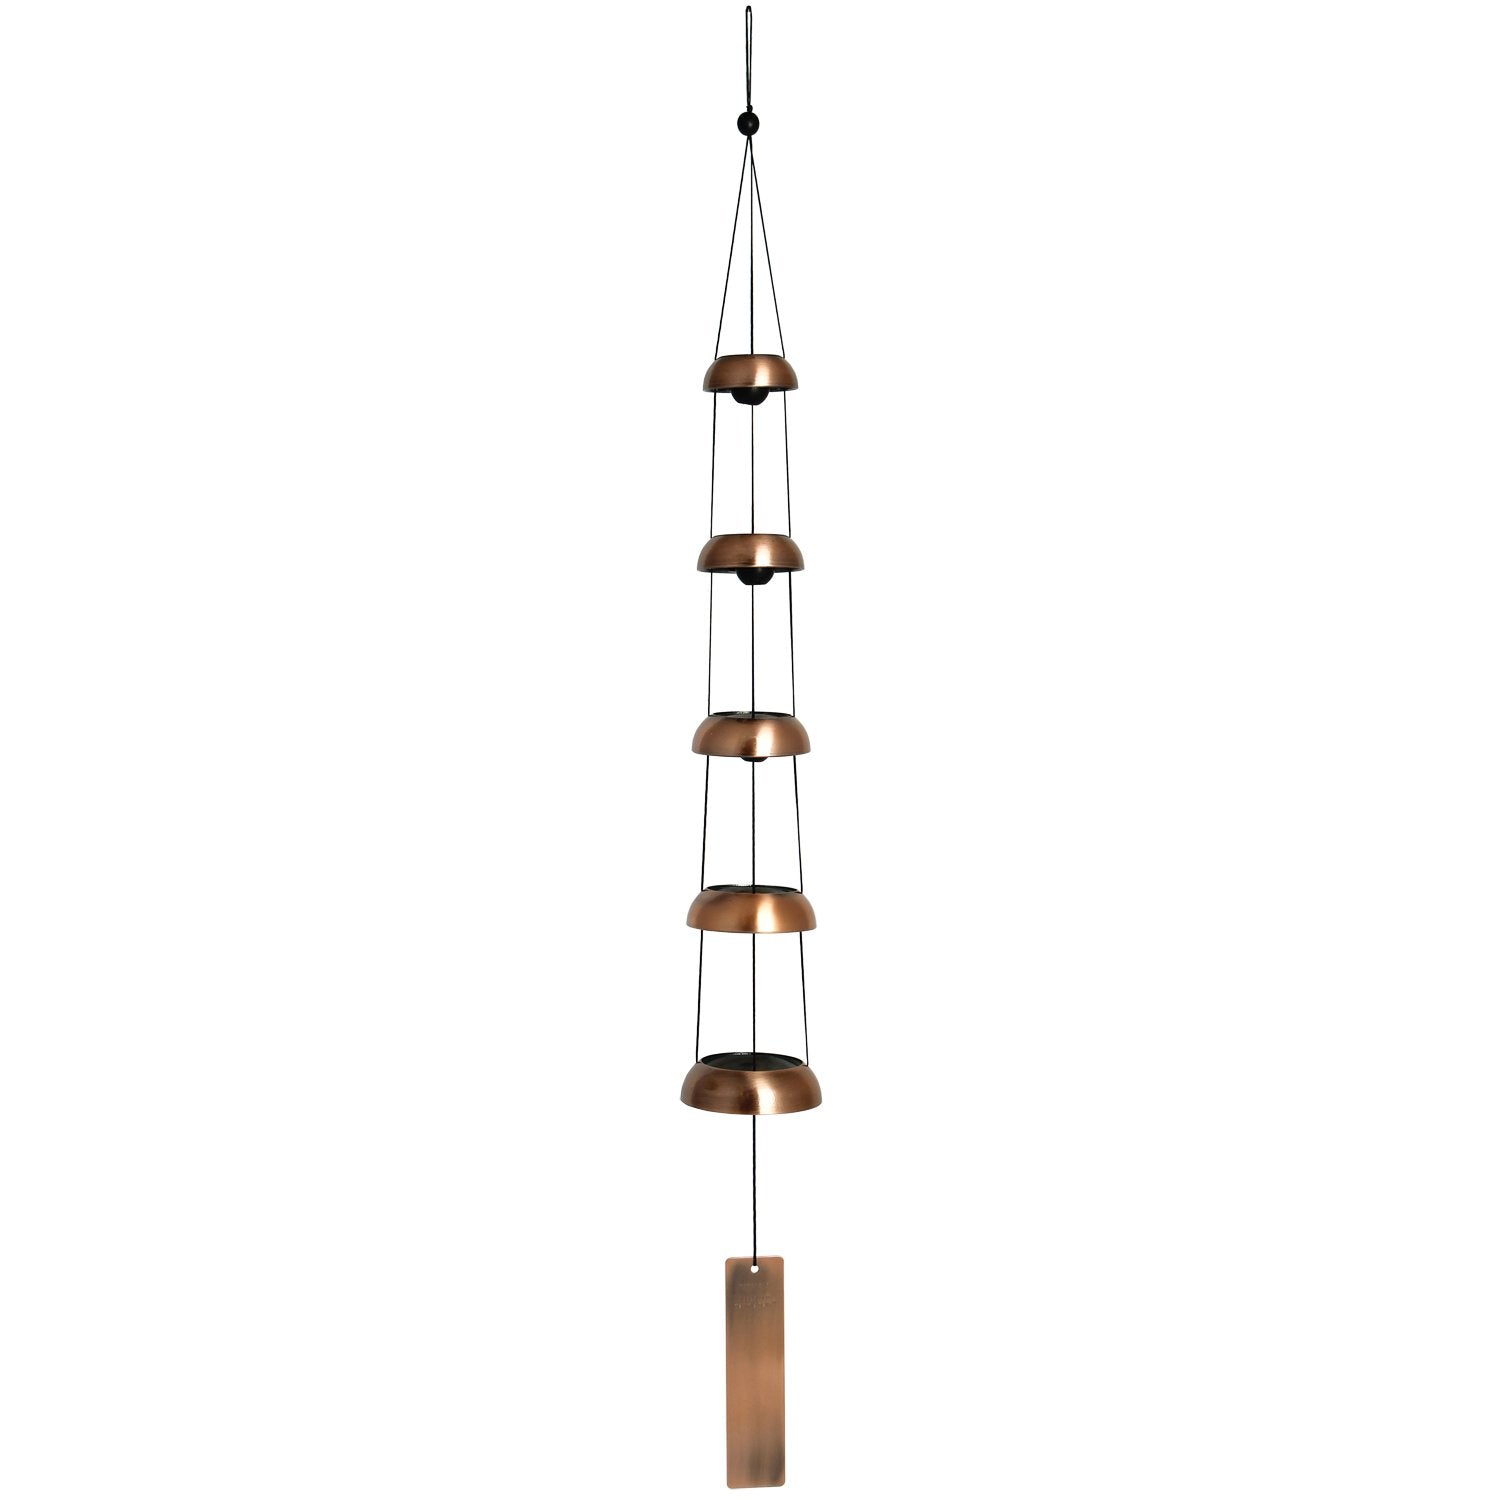 Temple Bells - Quintet, Copper full product image